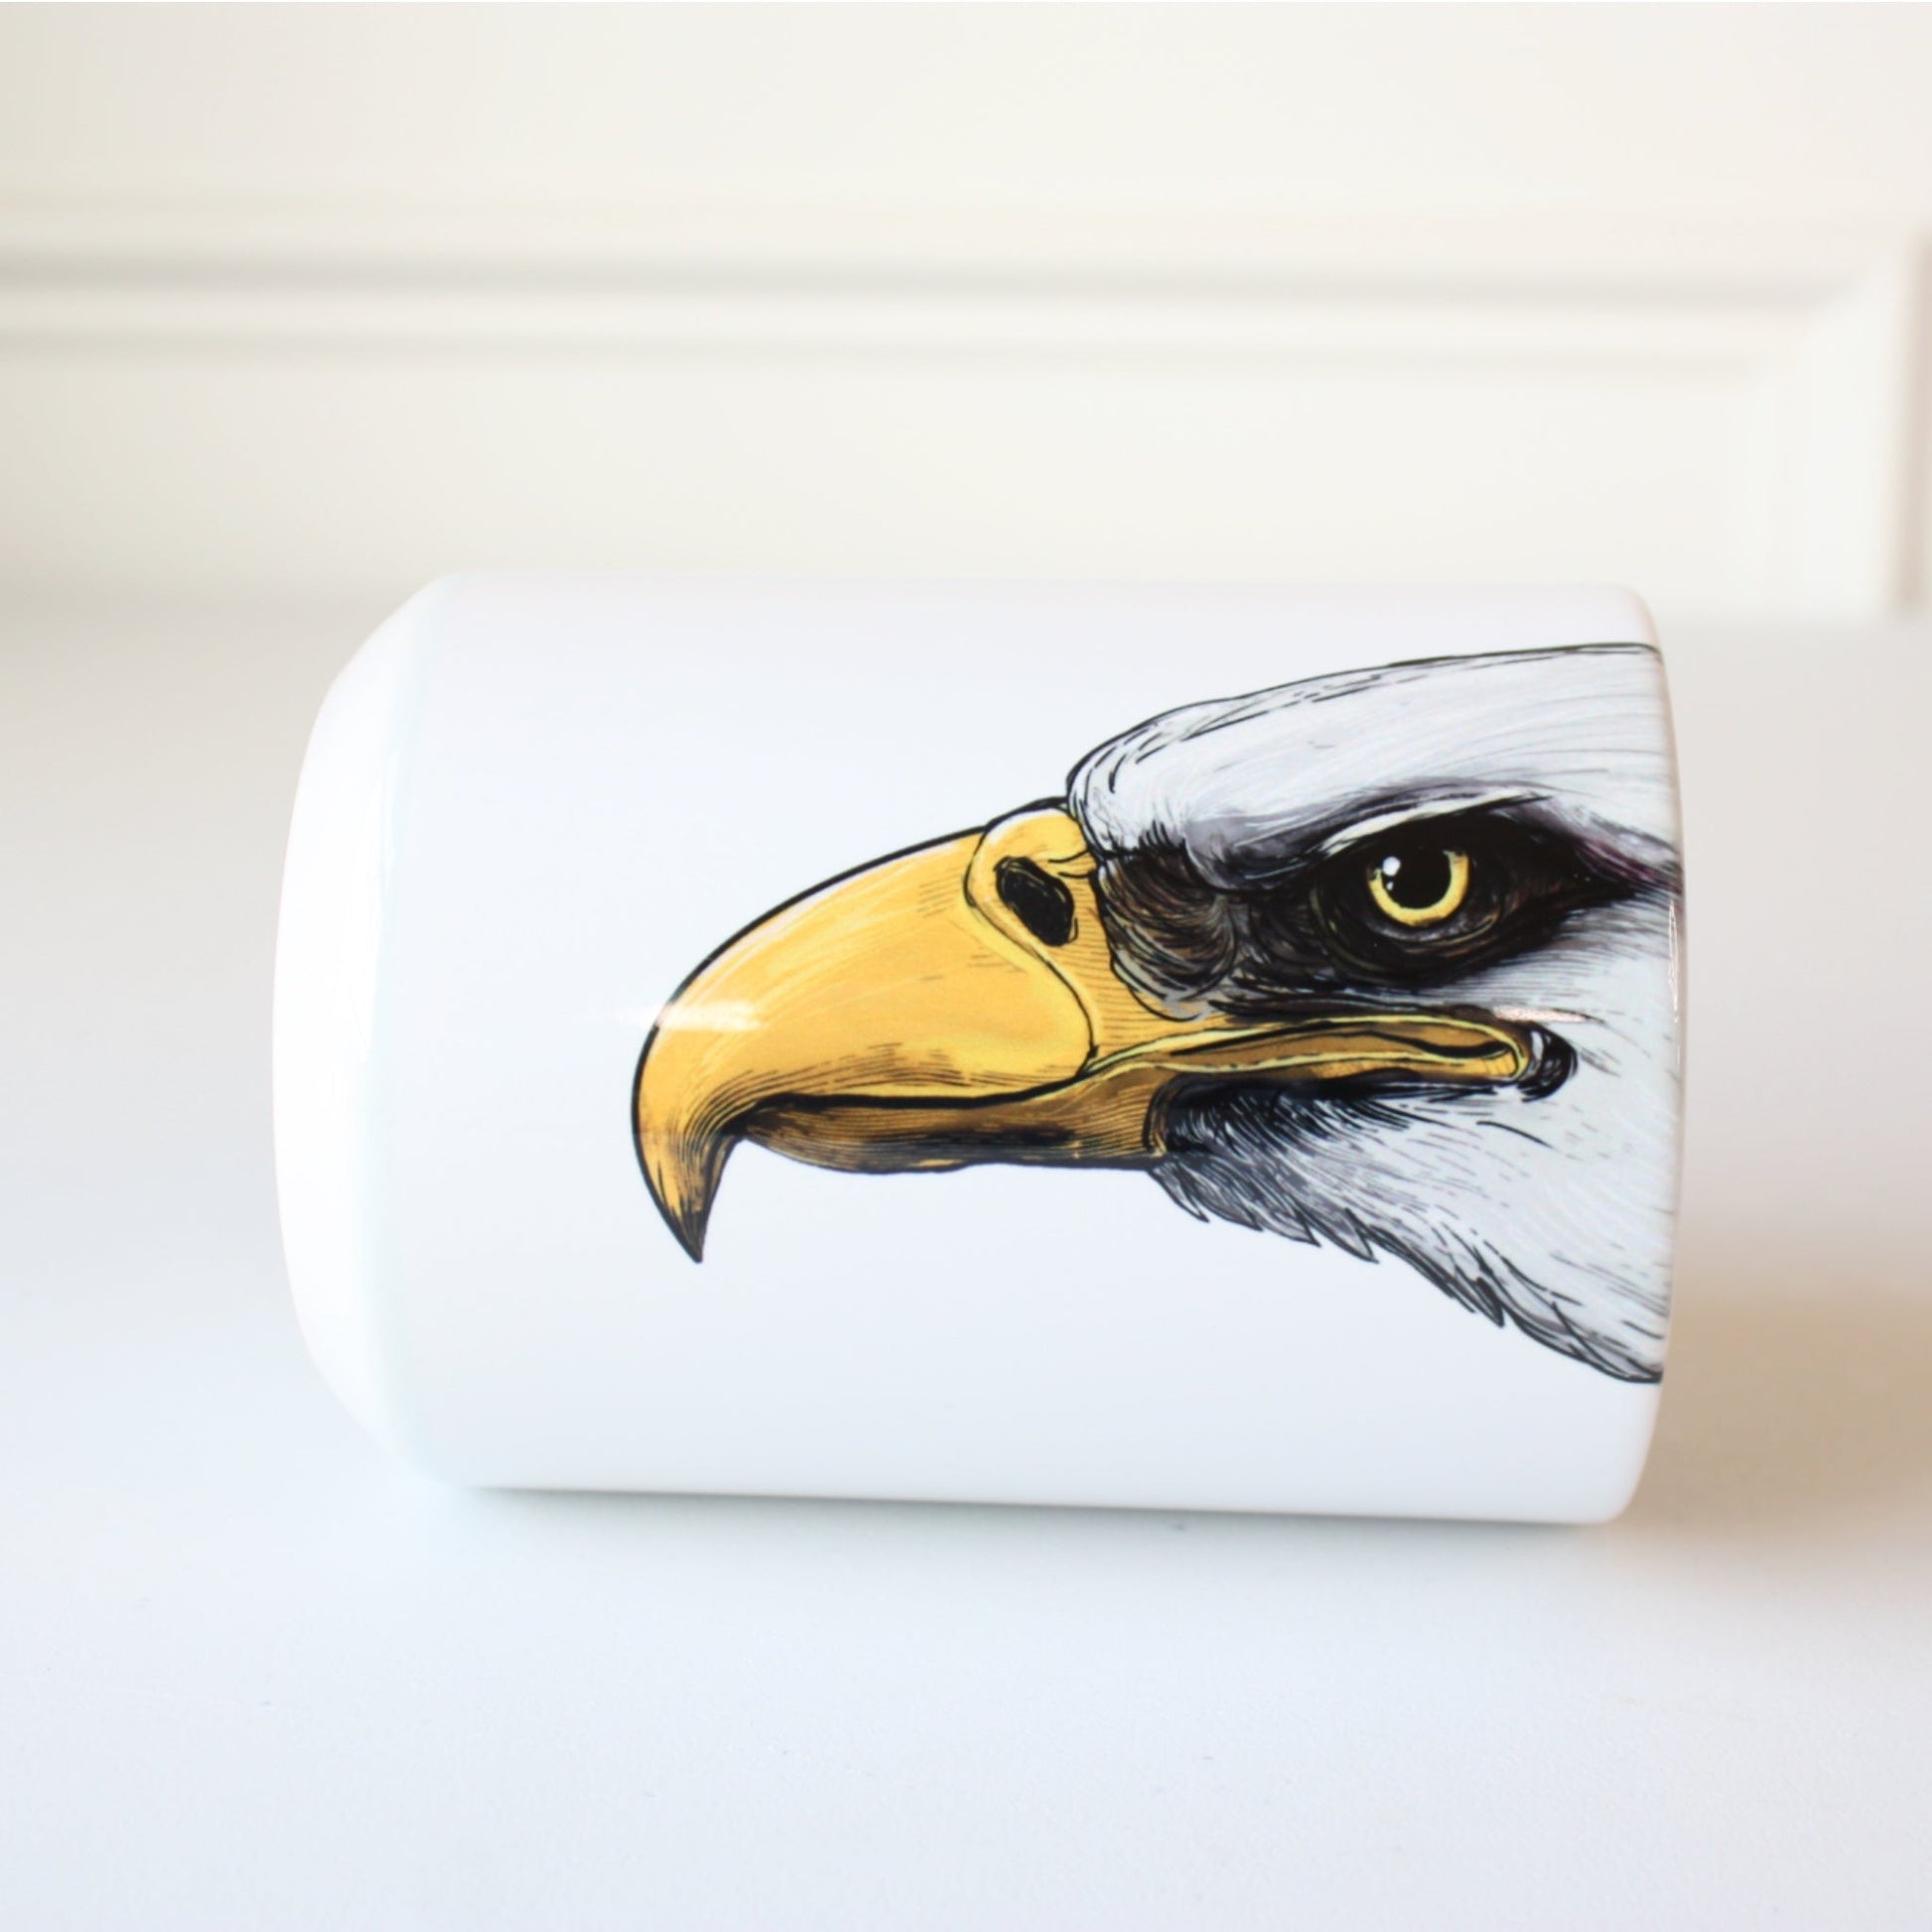 Eagle Snout Mug - Made in the USA